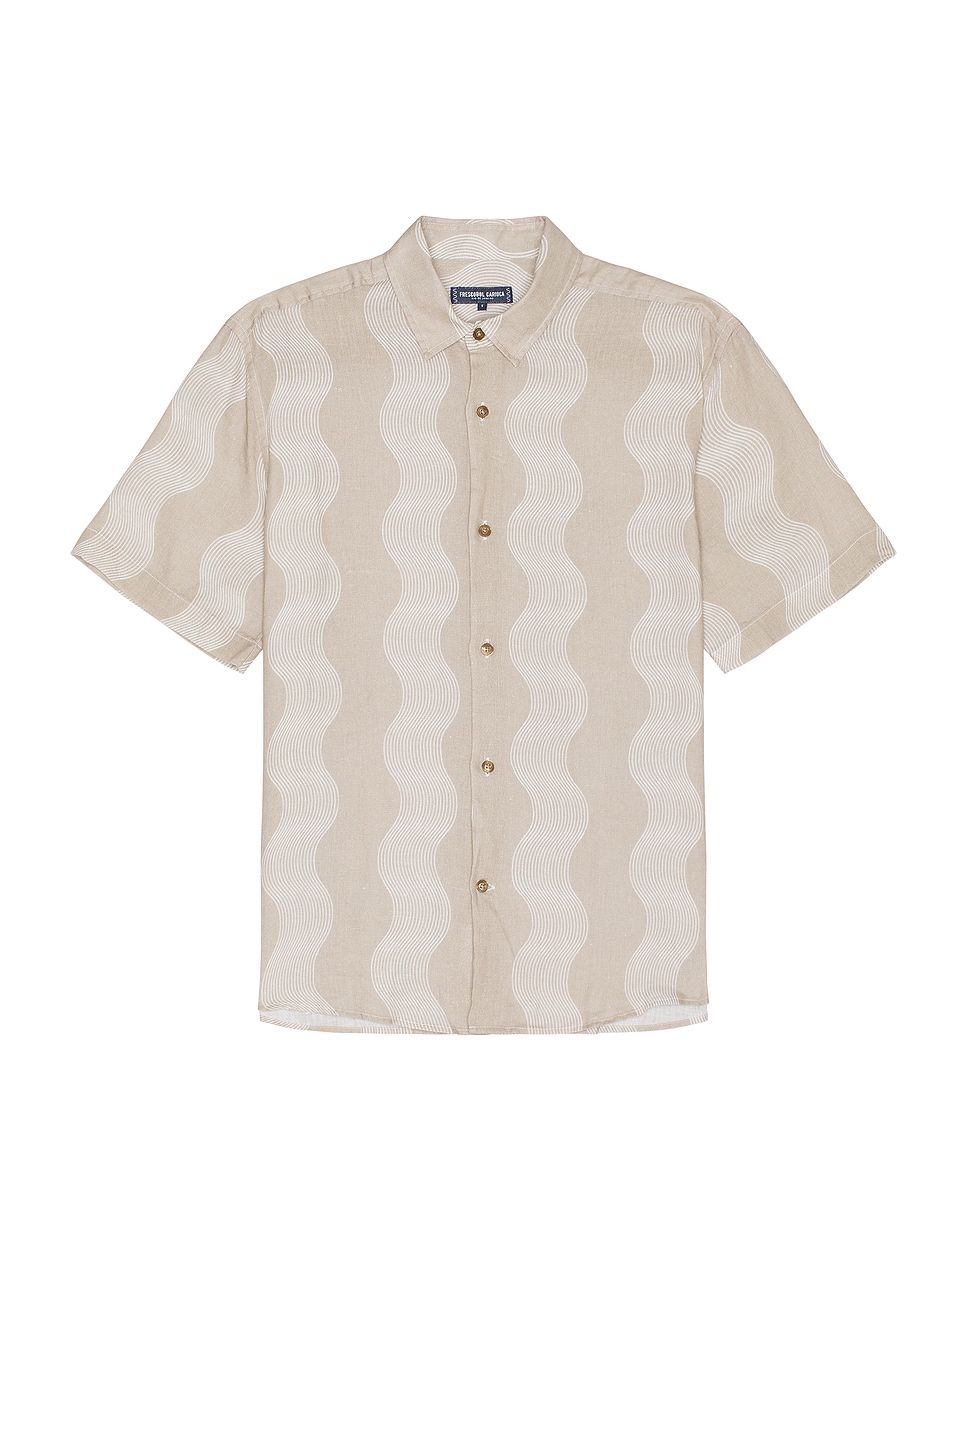 Castro Cabana Stripe Linen Classic Shirt in Brown